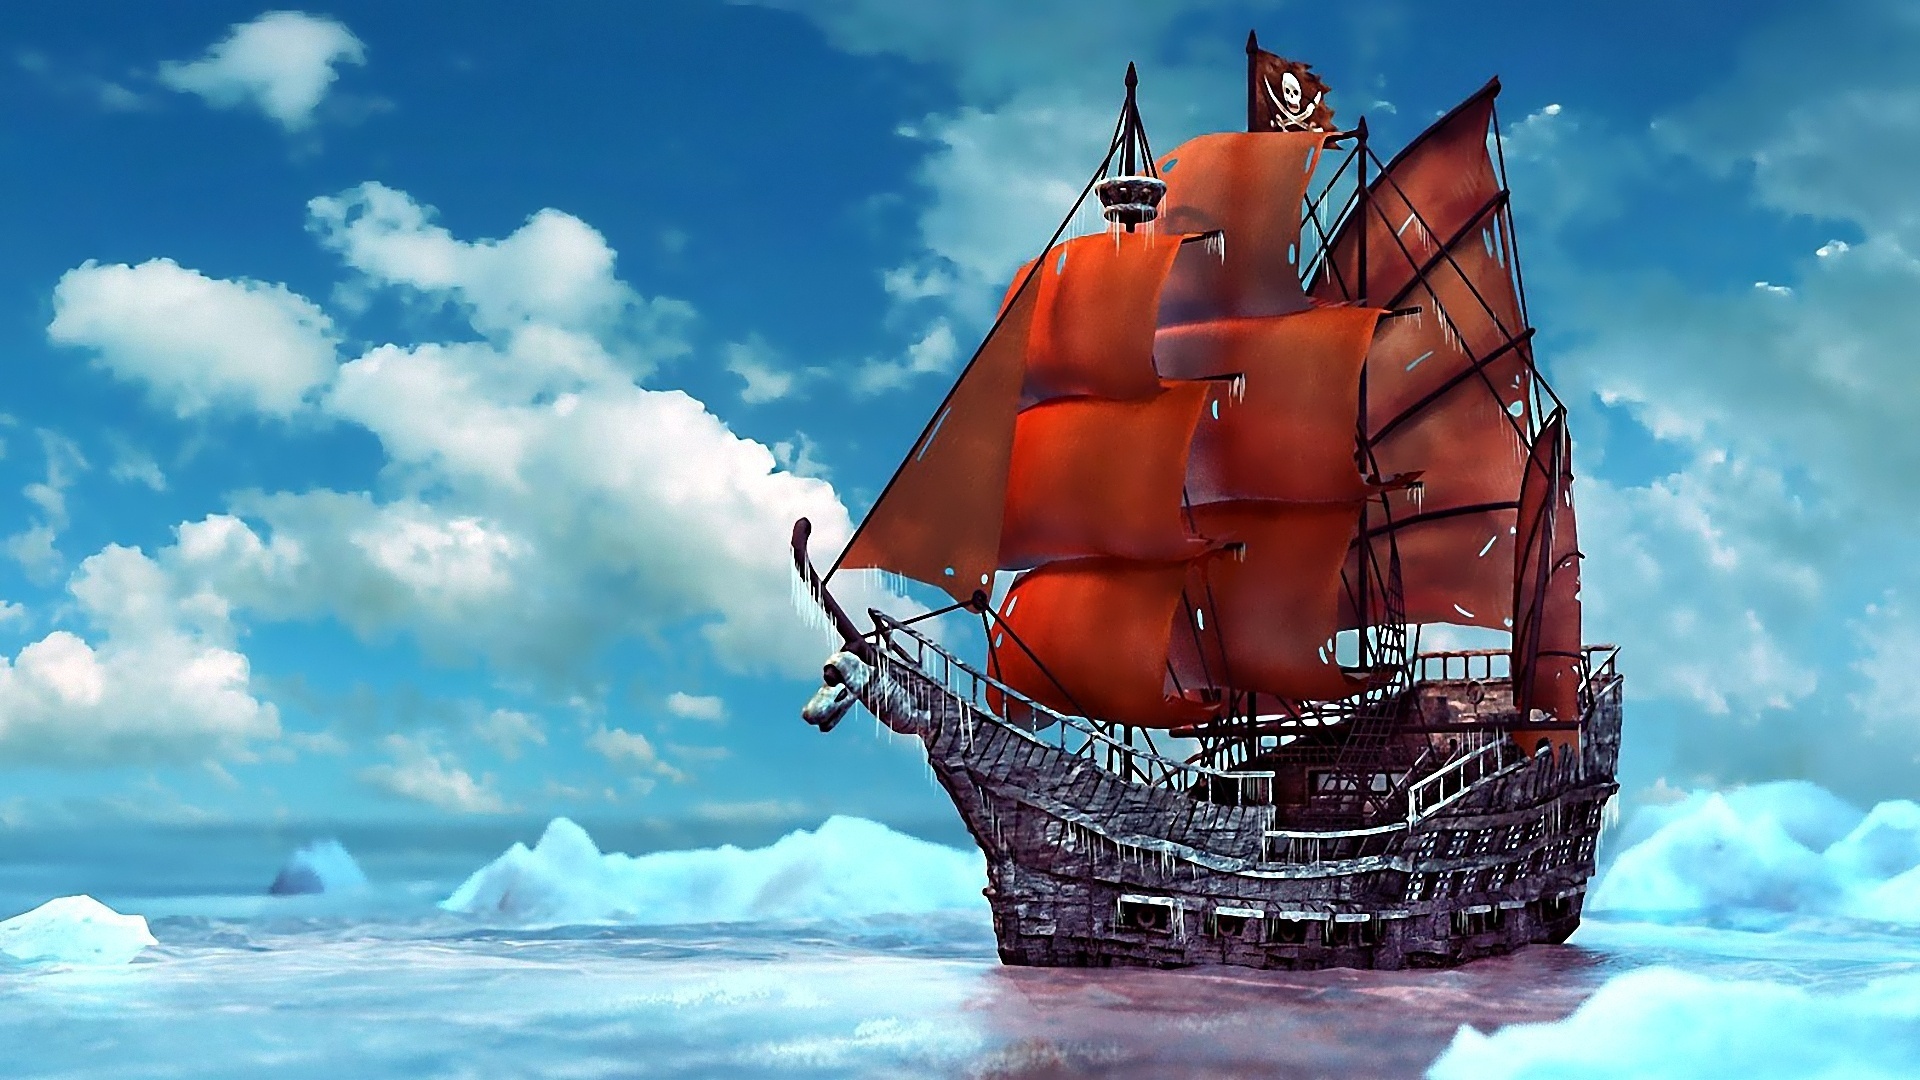  ship ships boat boats pirates ocean sea fantasy wallpaper background